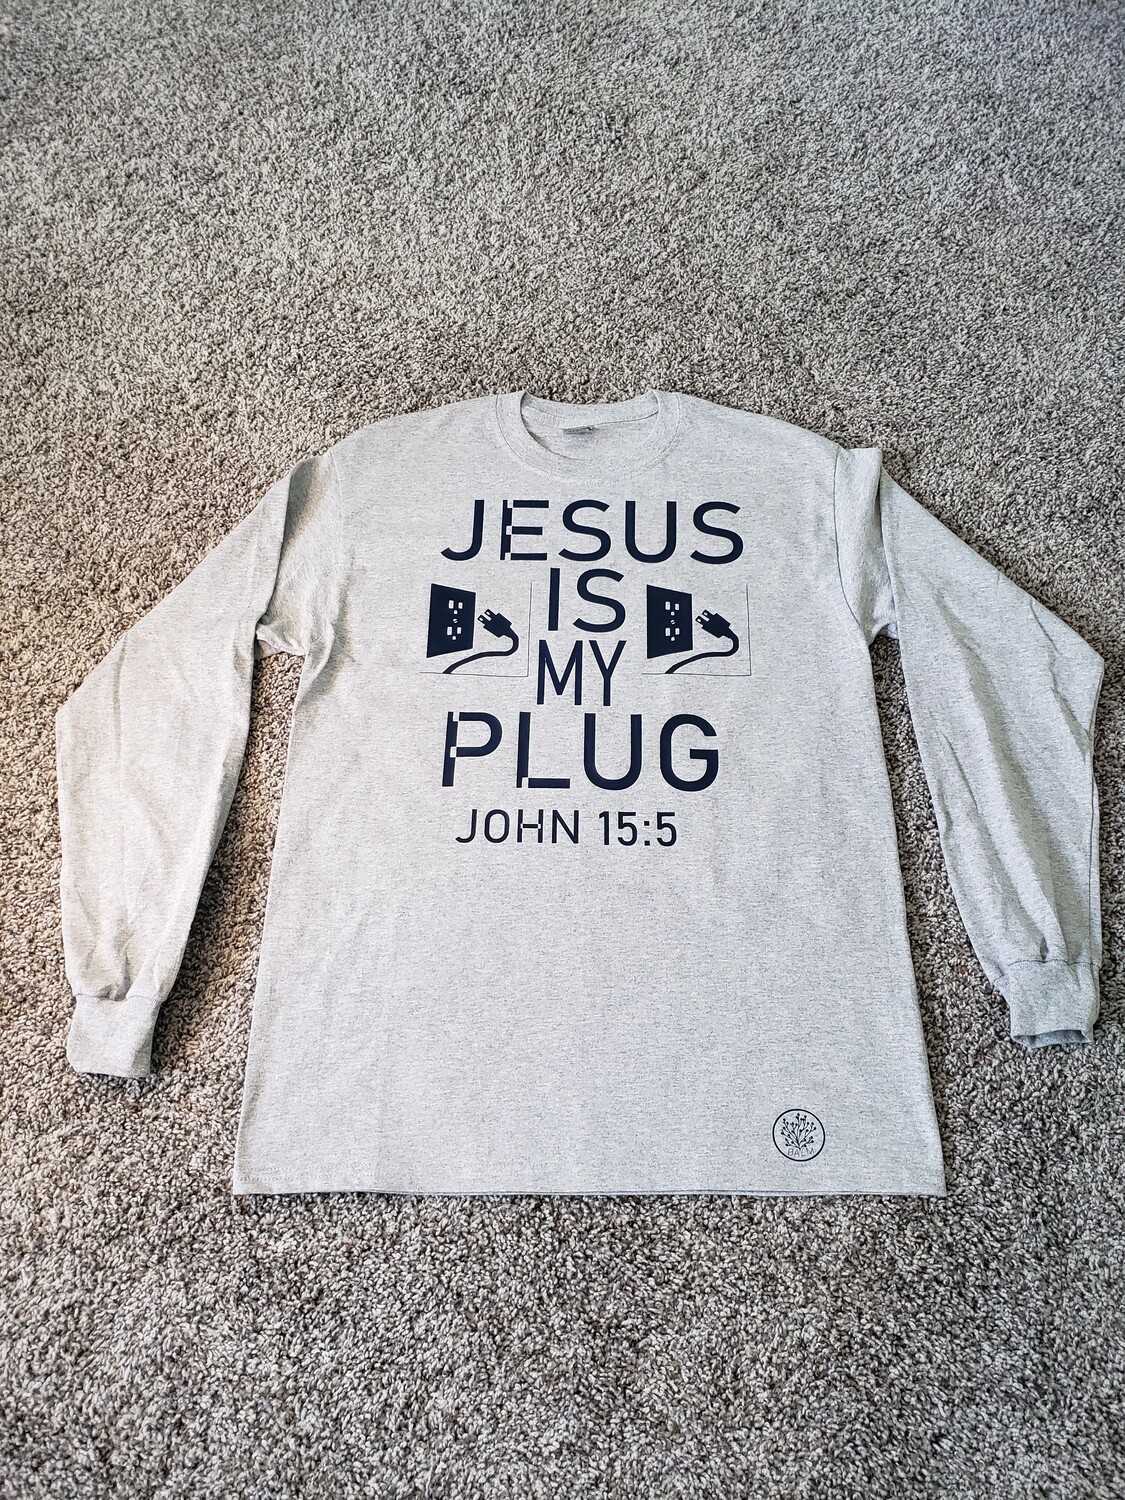 Jesus is my plug (long sleeve tee)